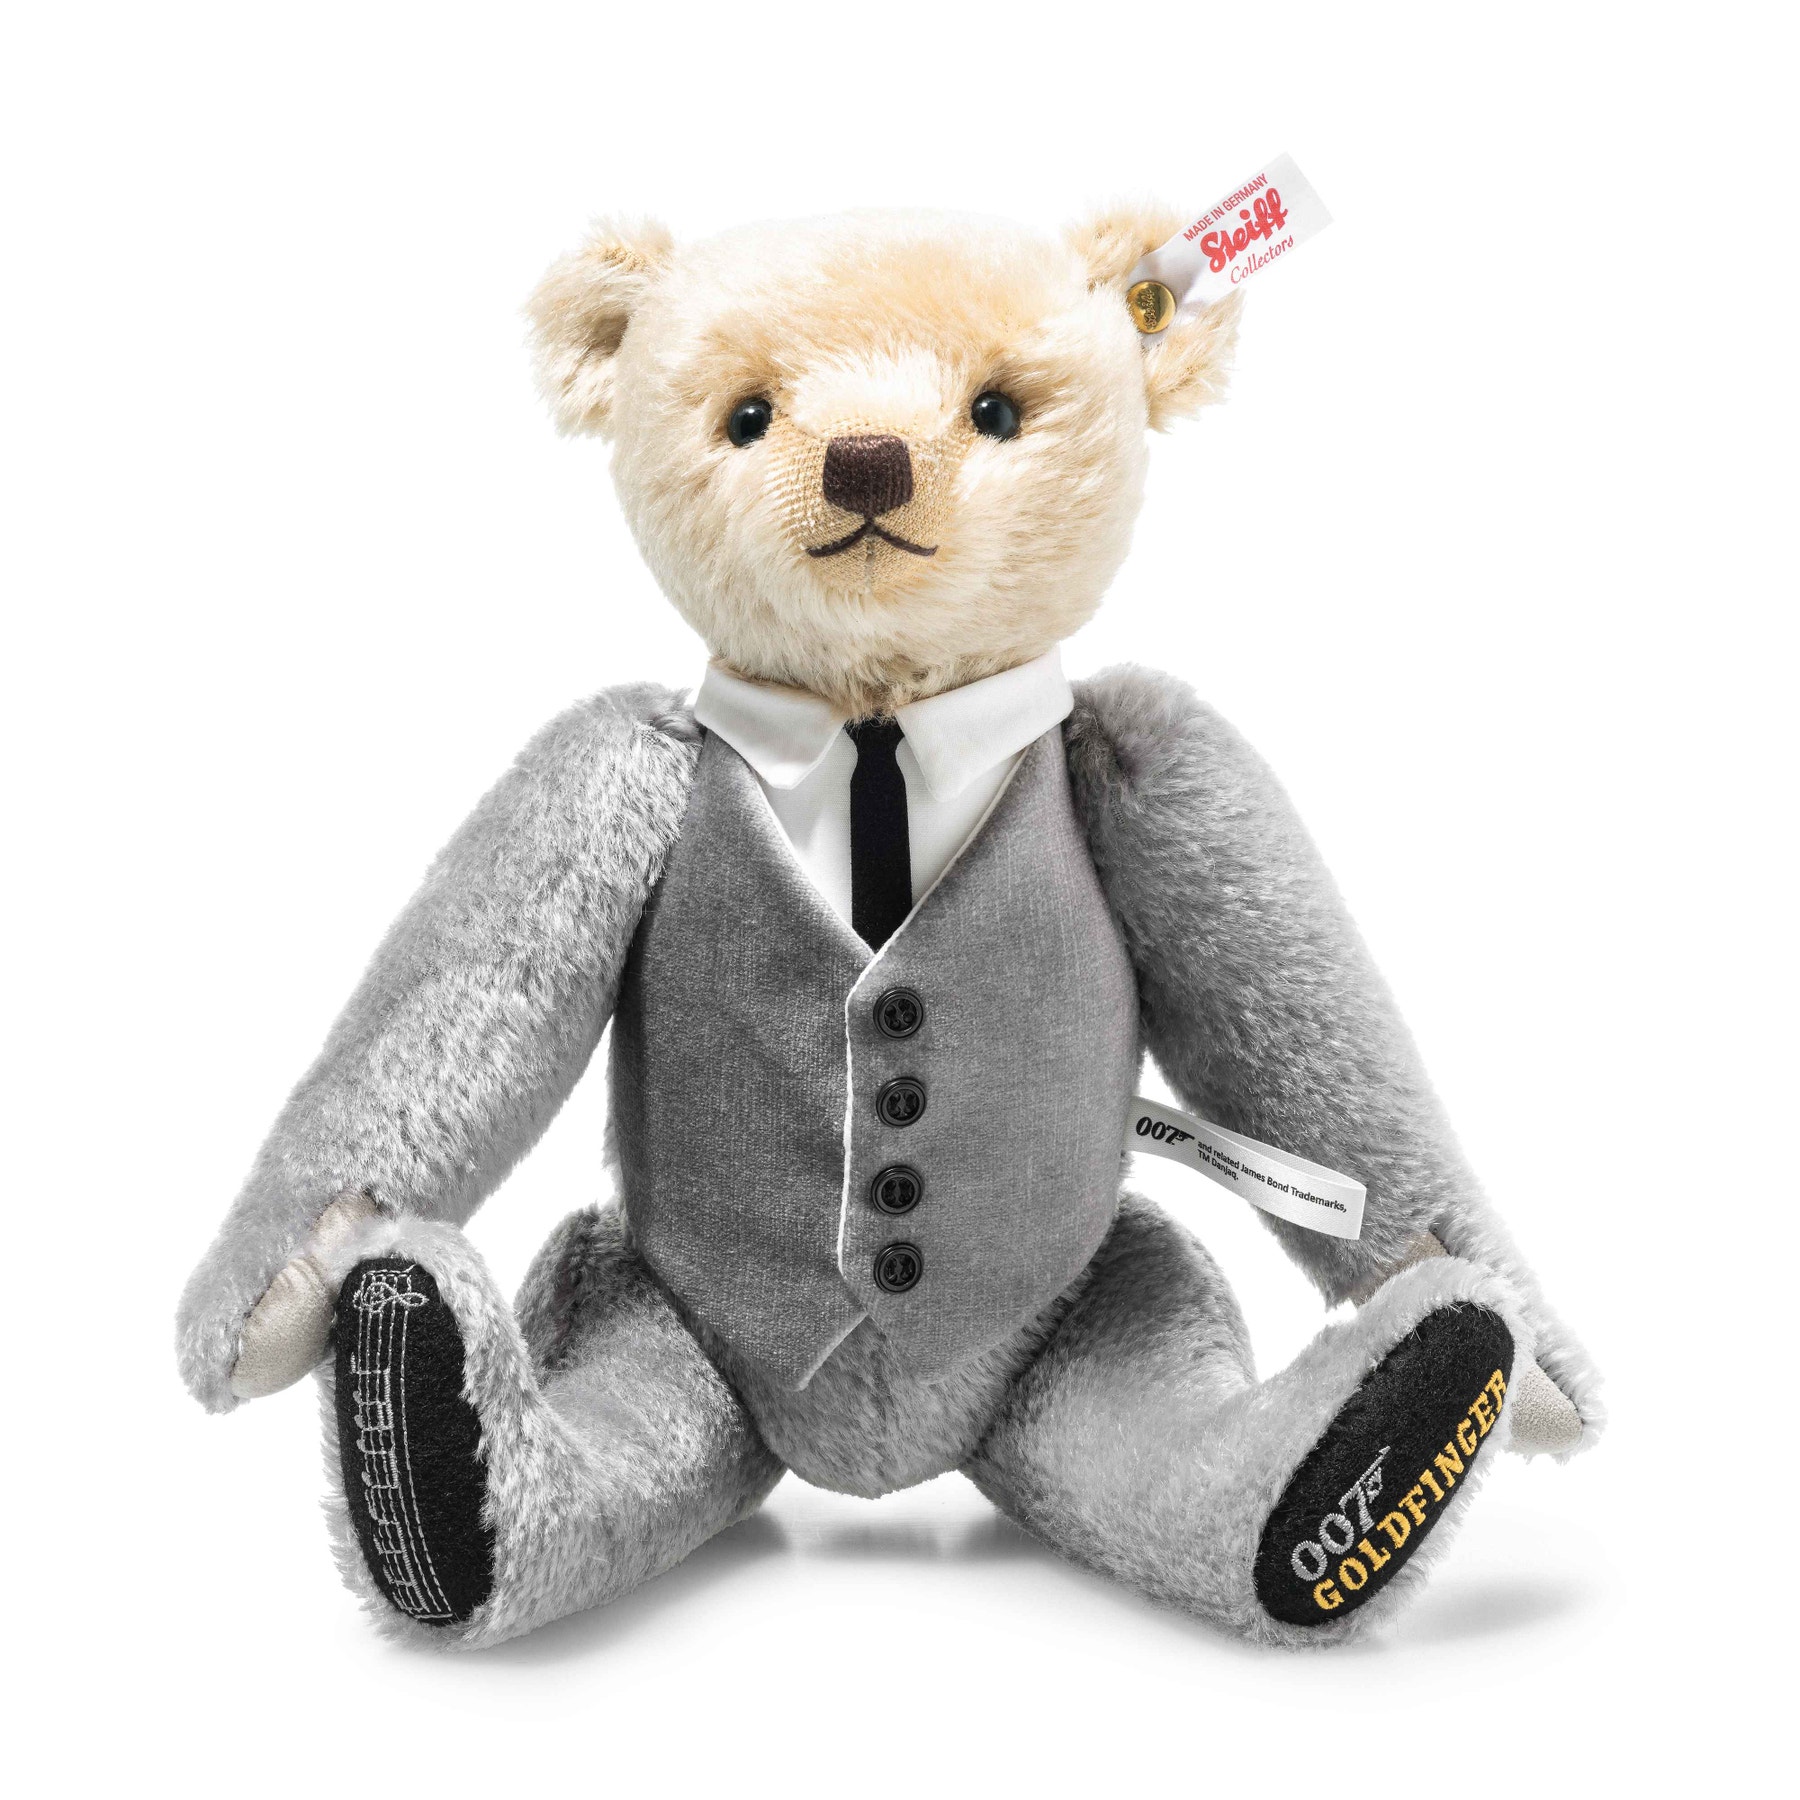 James Bond “Goldfinger” Musical Teddy Bear - 2024 Limited Edition